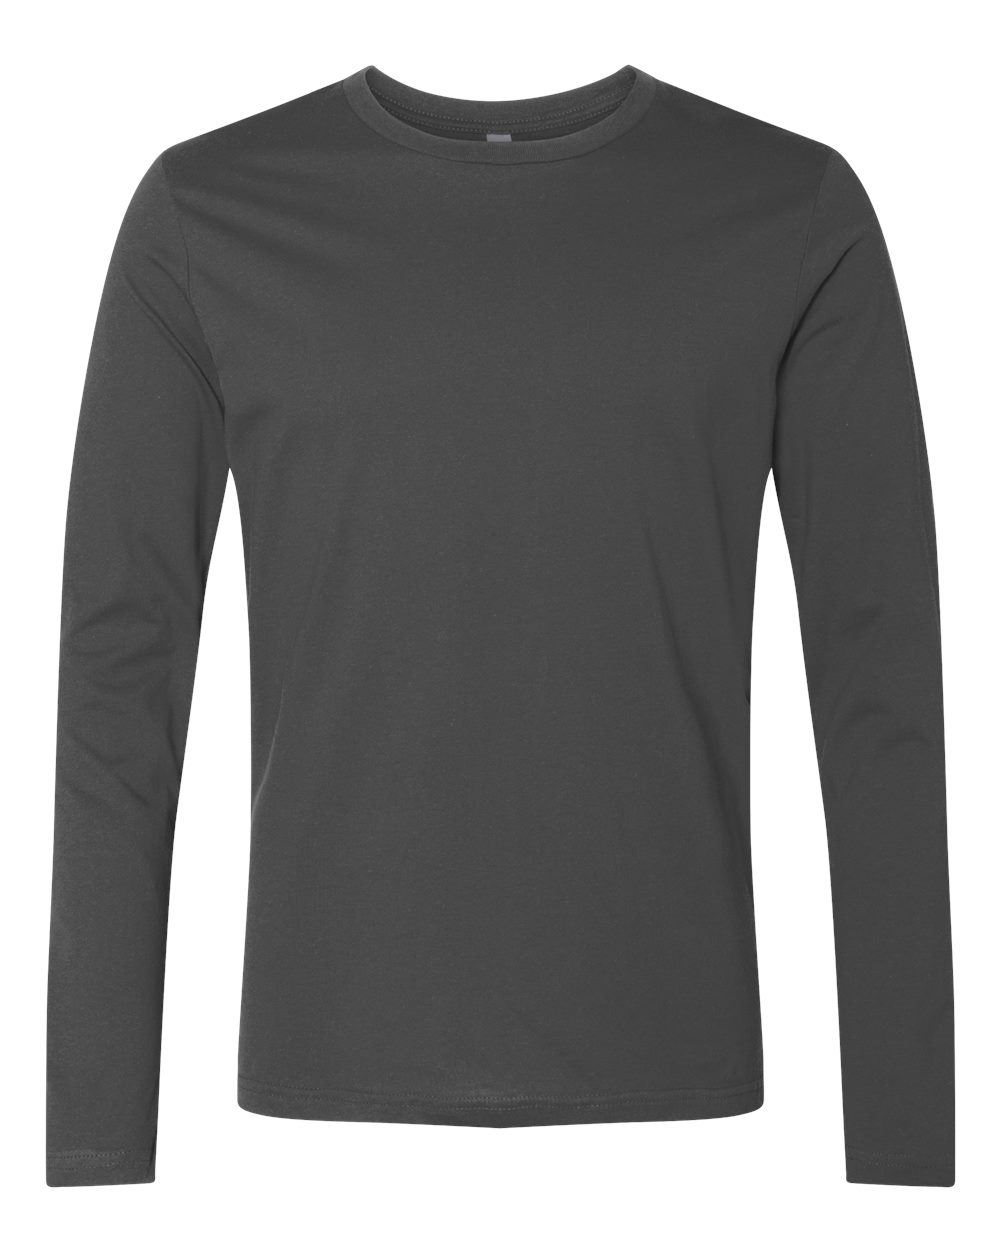 Next Level Mens Plain Blank Premium Long Sleeve Crew T Shirt 3601 up to ...